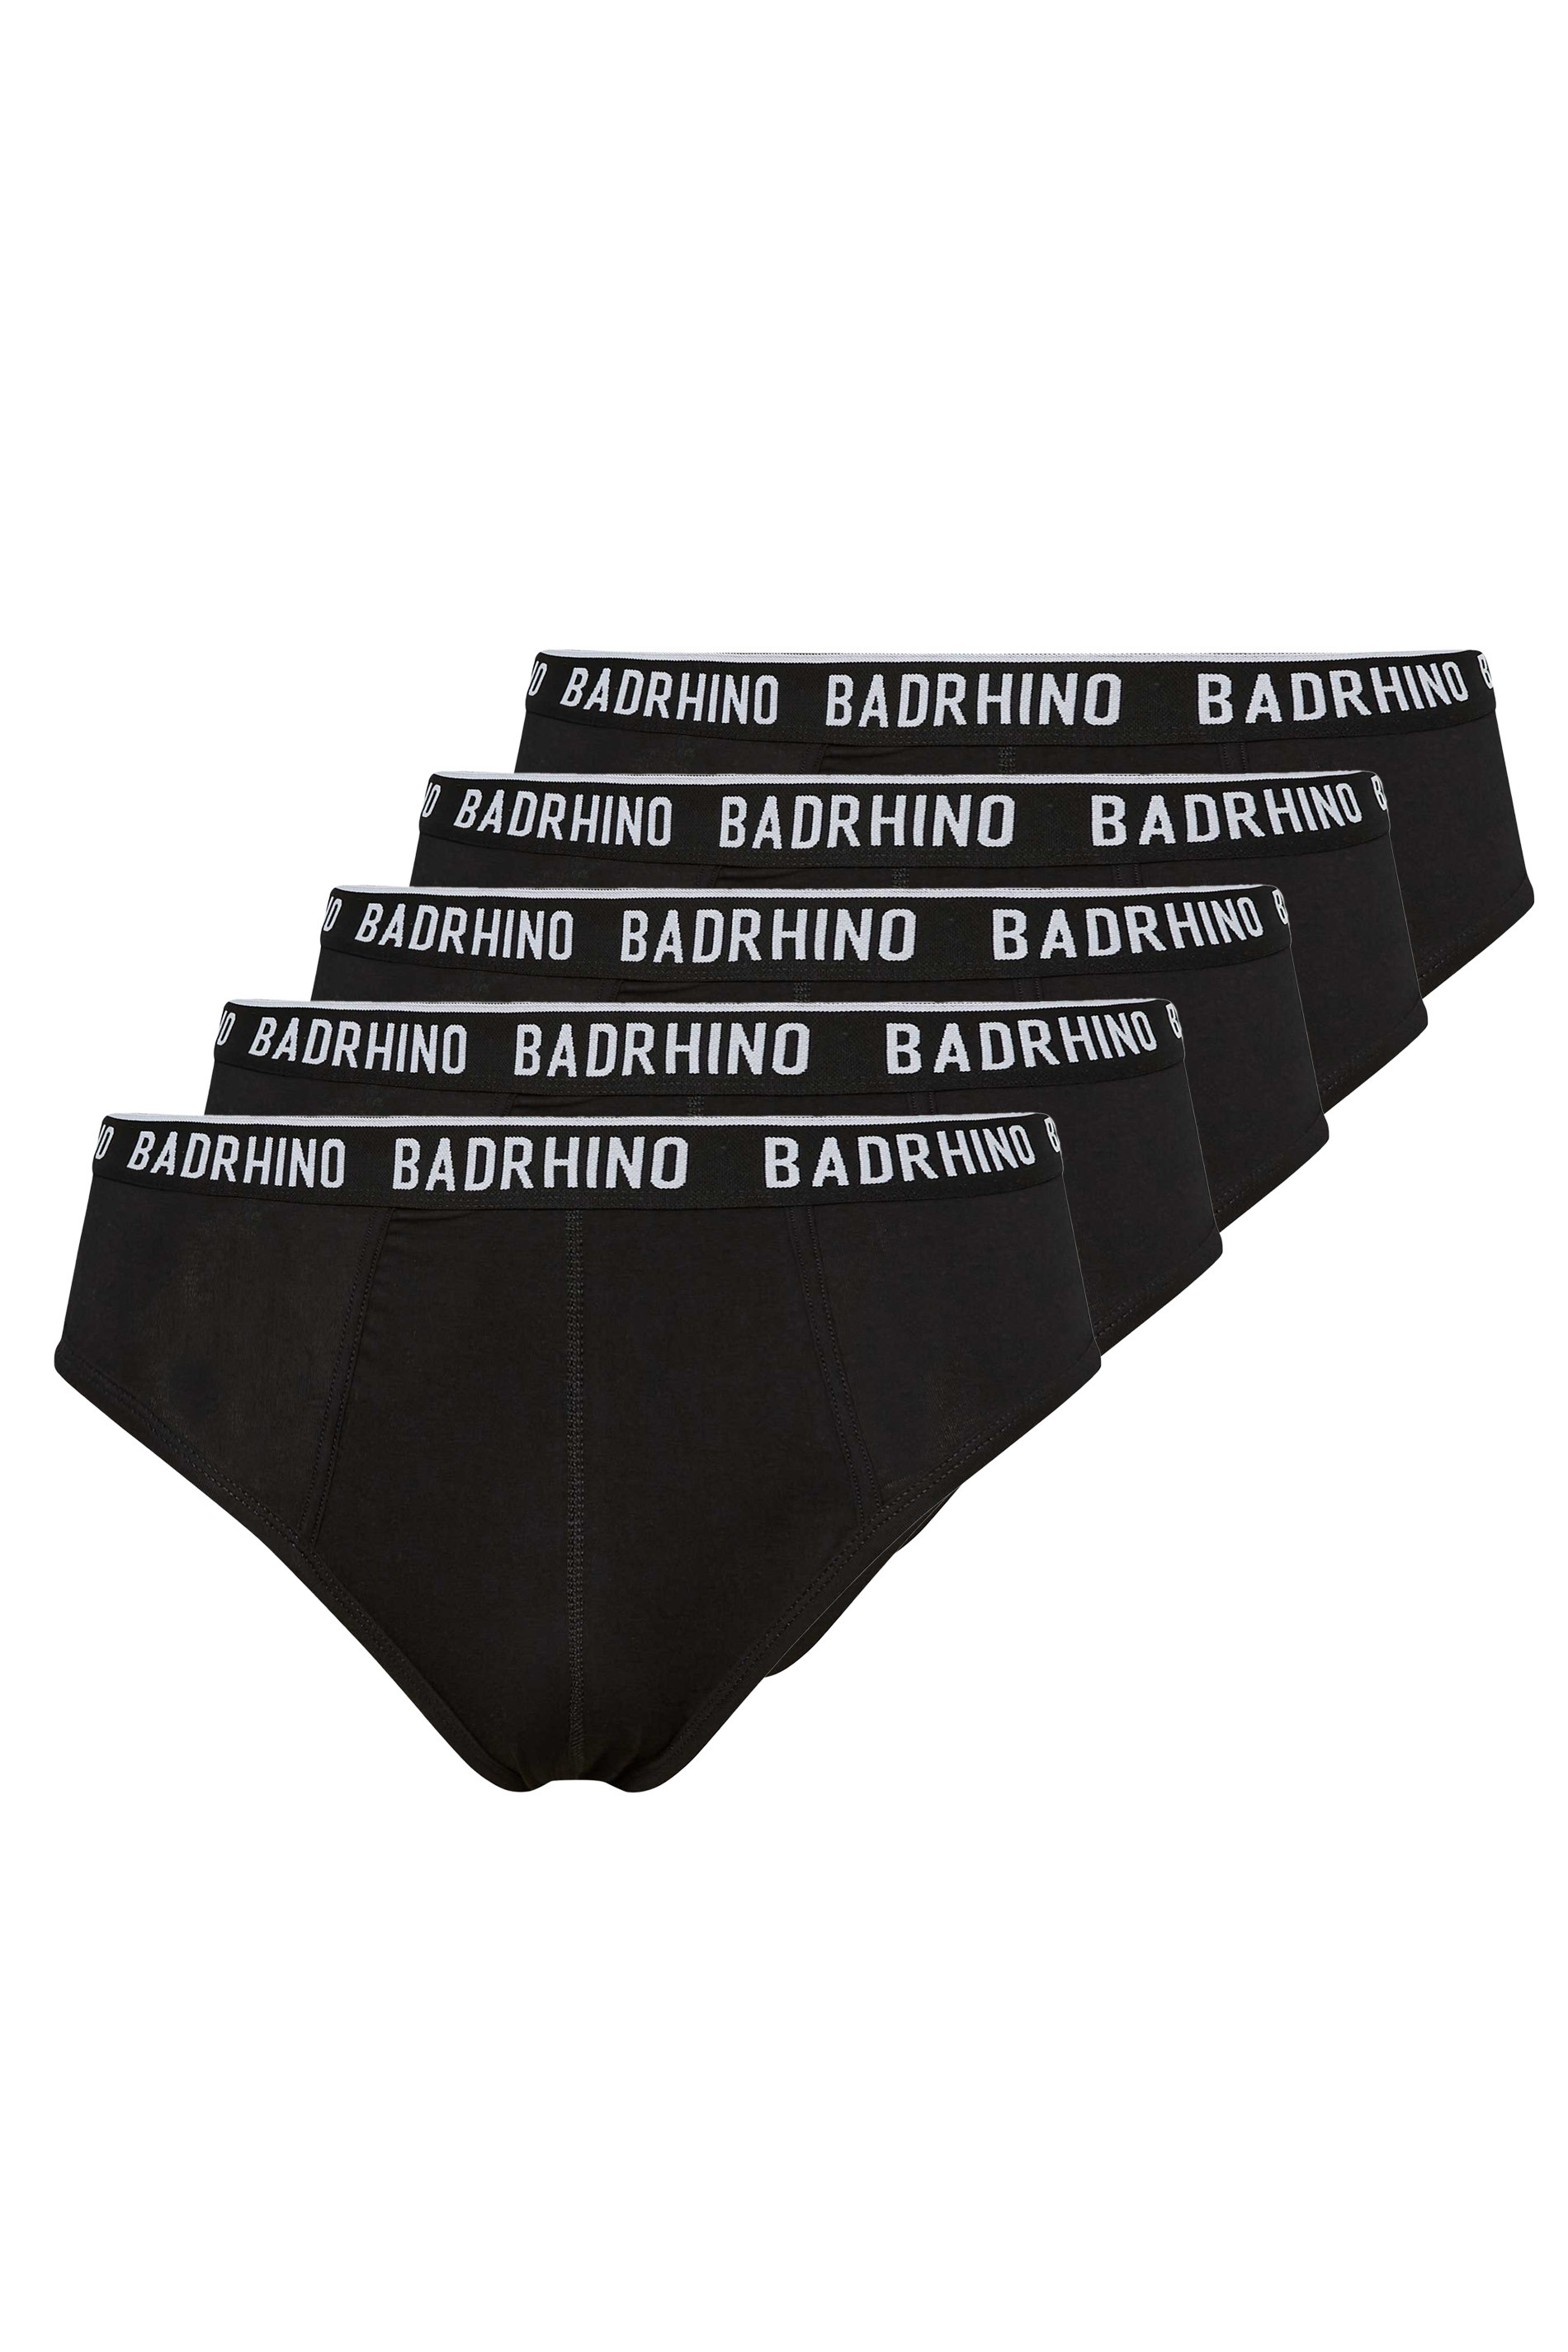 BadRhino Big & Tall 5 PACK Black Briefs | BadRhino